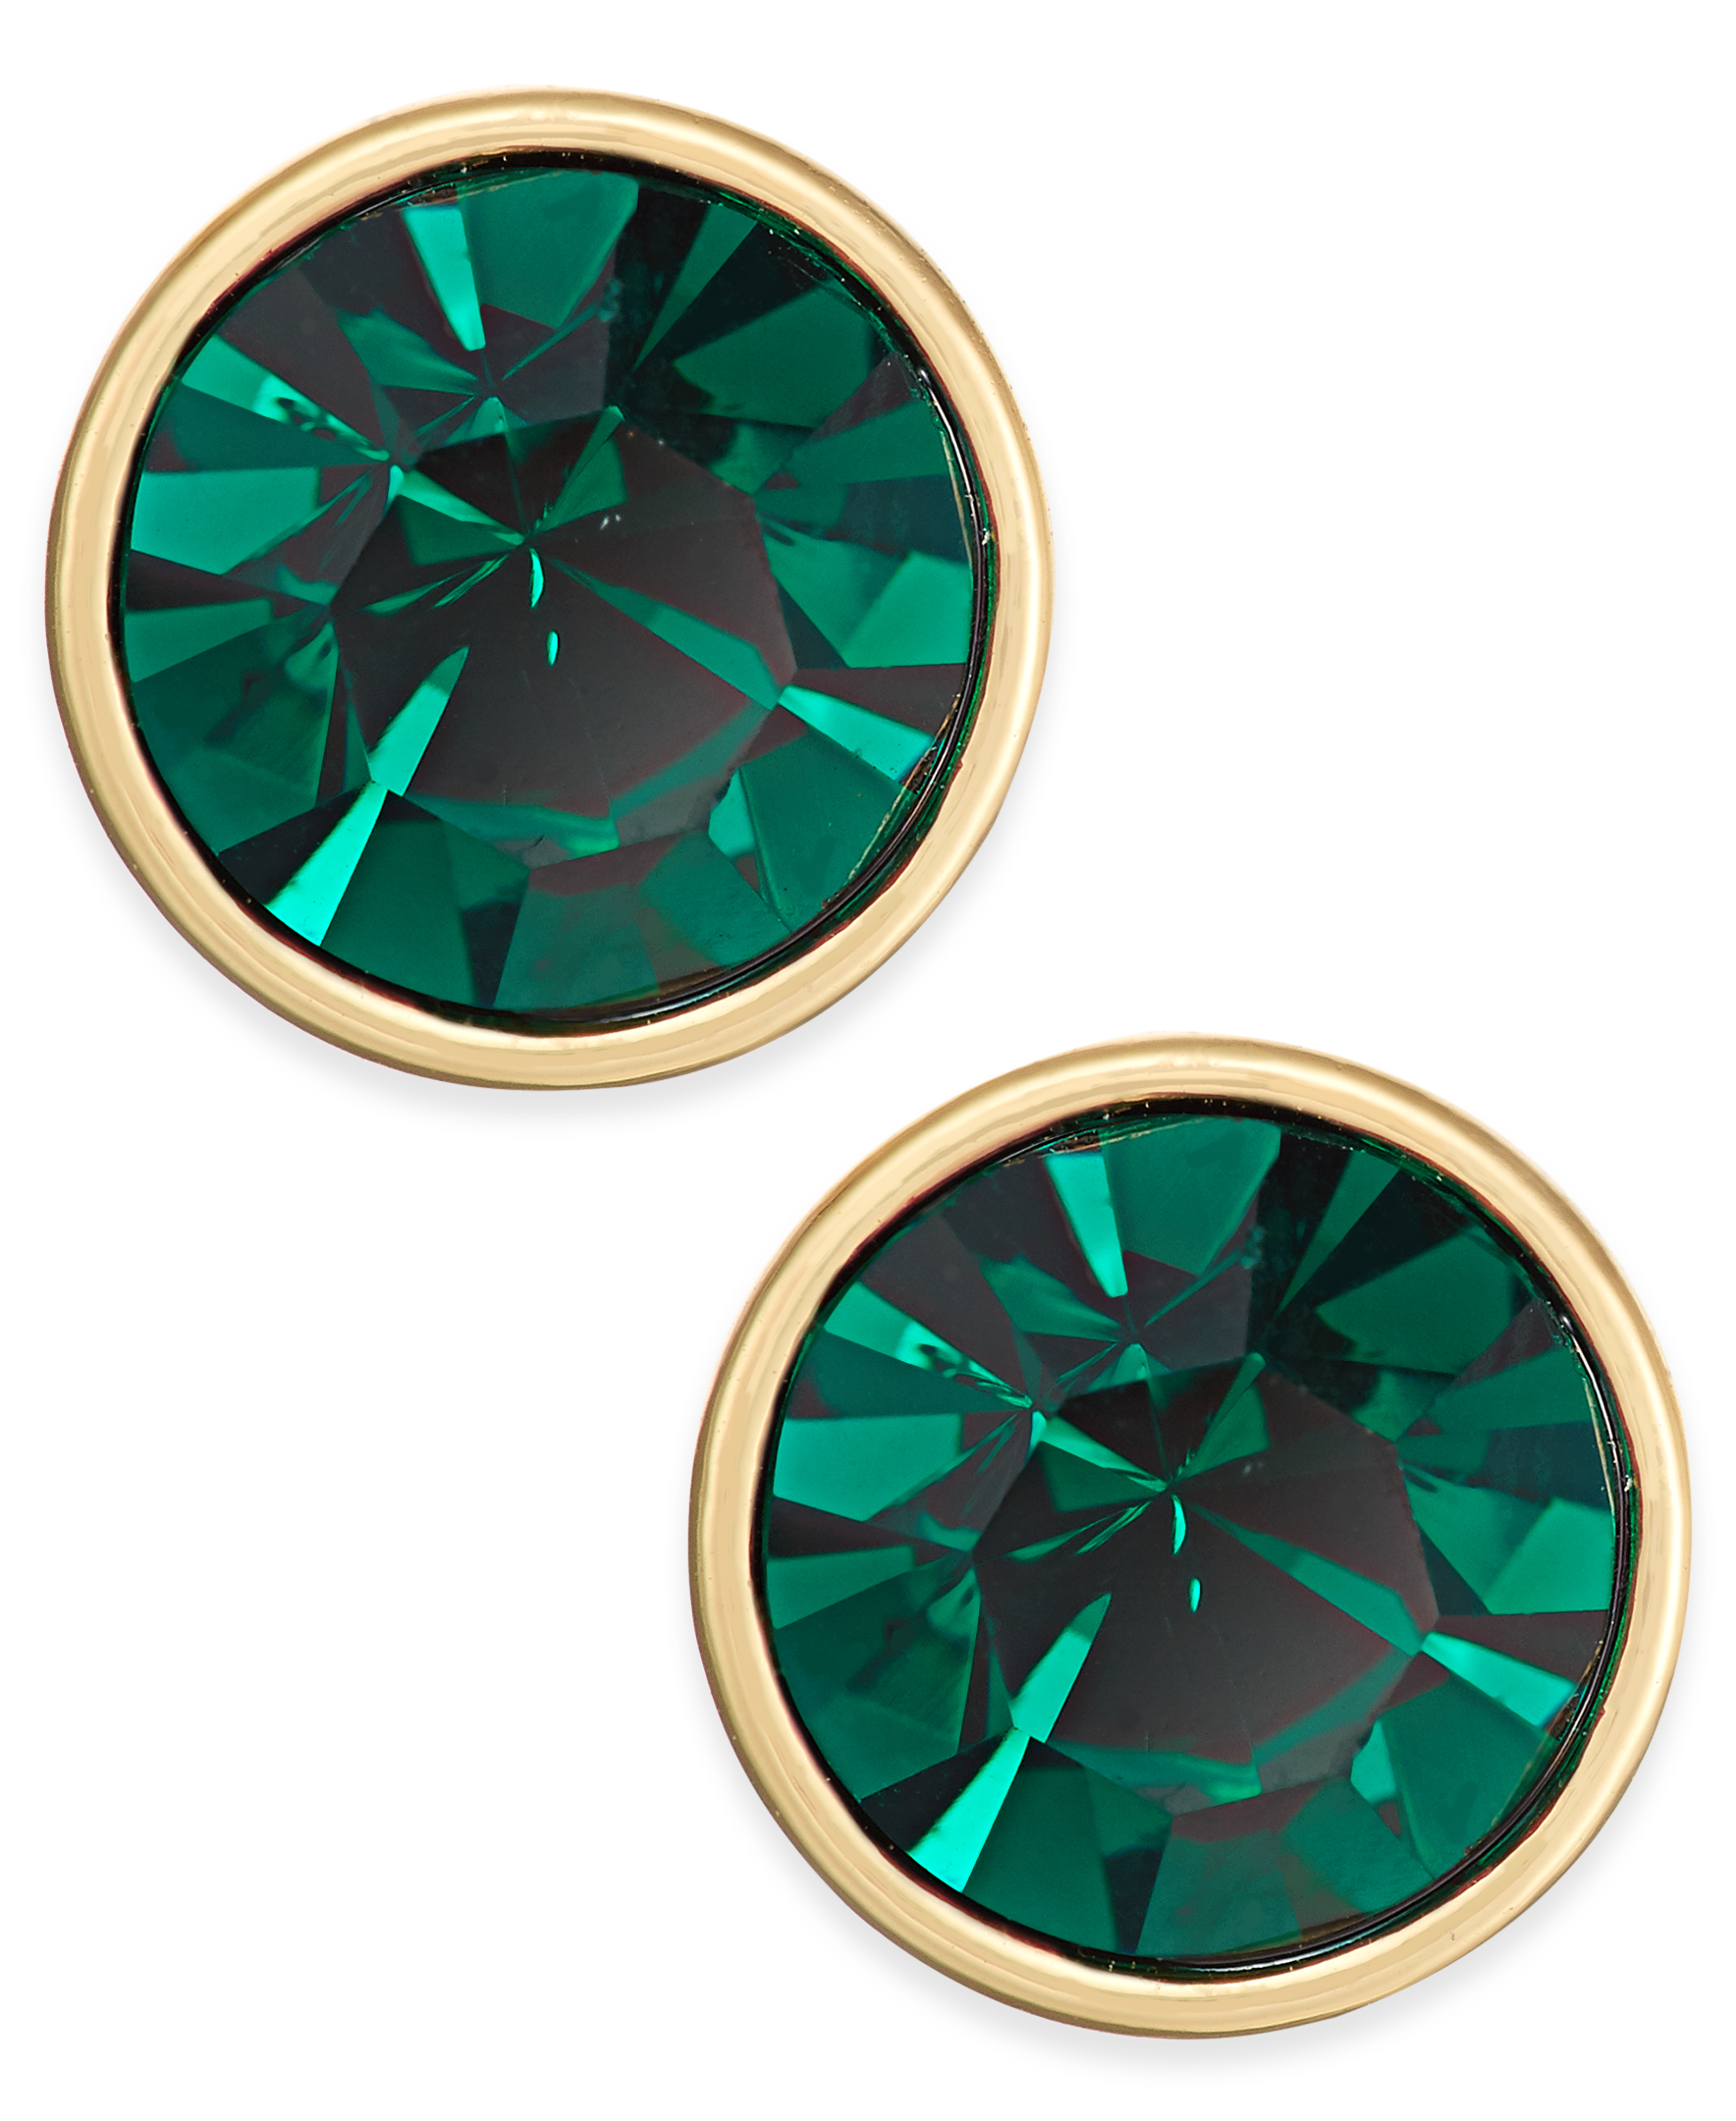 kate spade new york Gold-Tone Green Crystal Stud Earrings $38